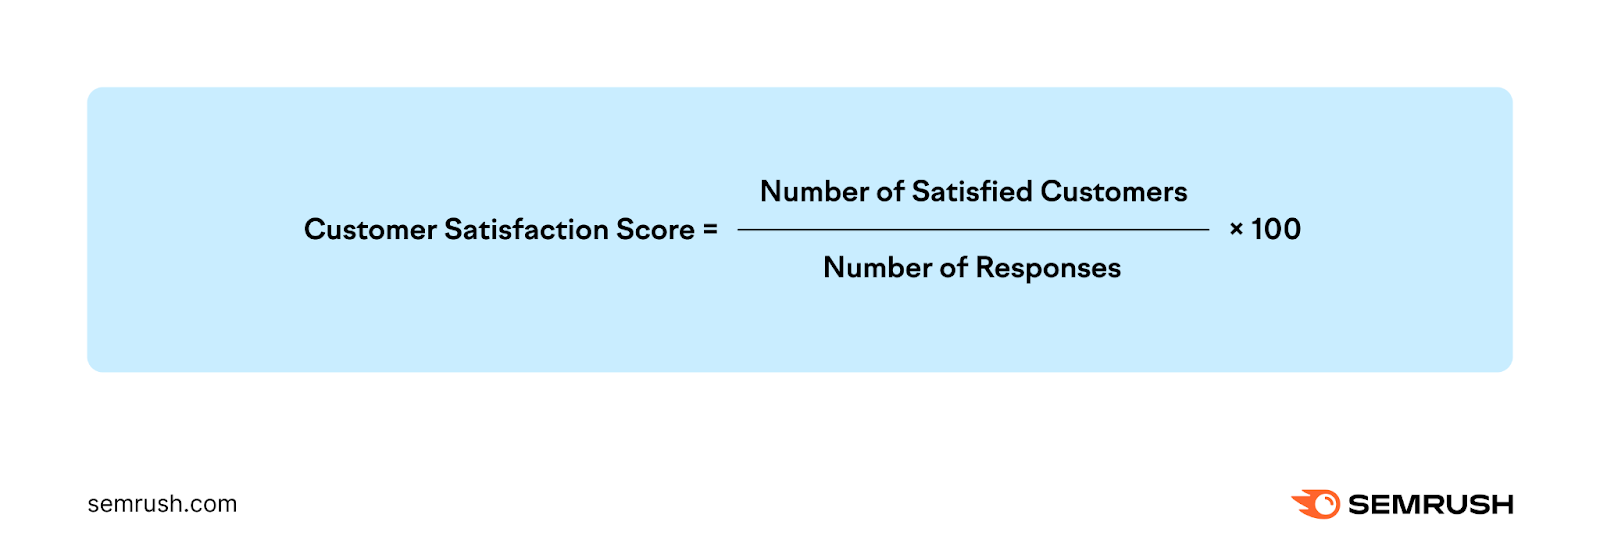 Customer satisfaction score formula